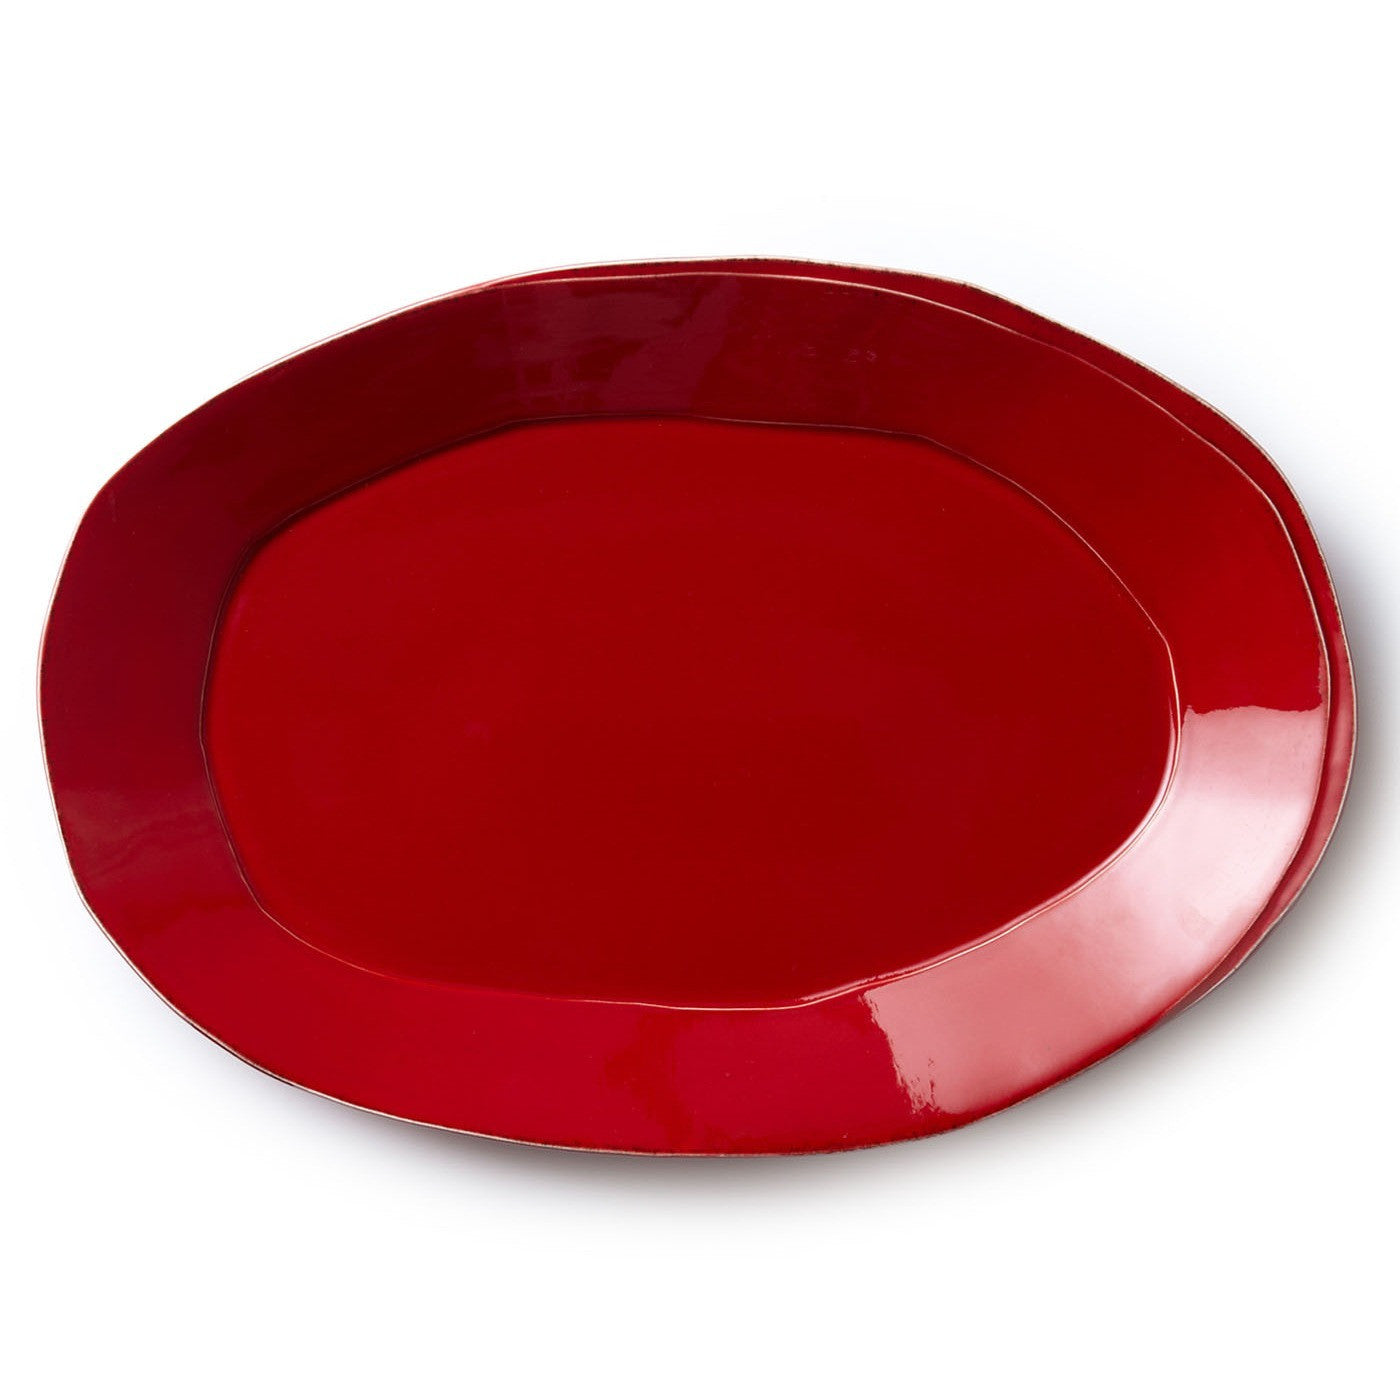 VIETRI: Lastra Red Oval Platter - Artistica.com